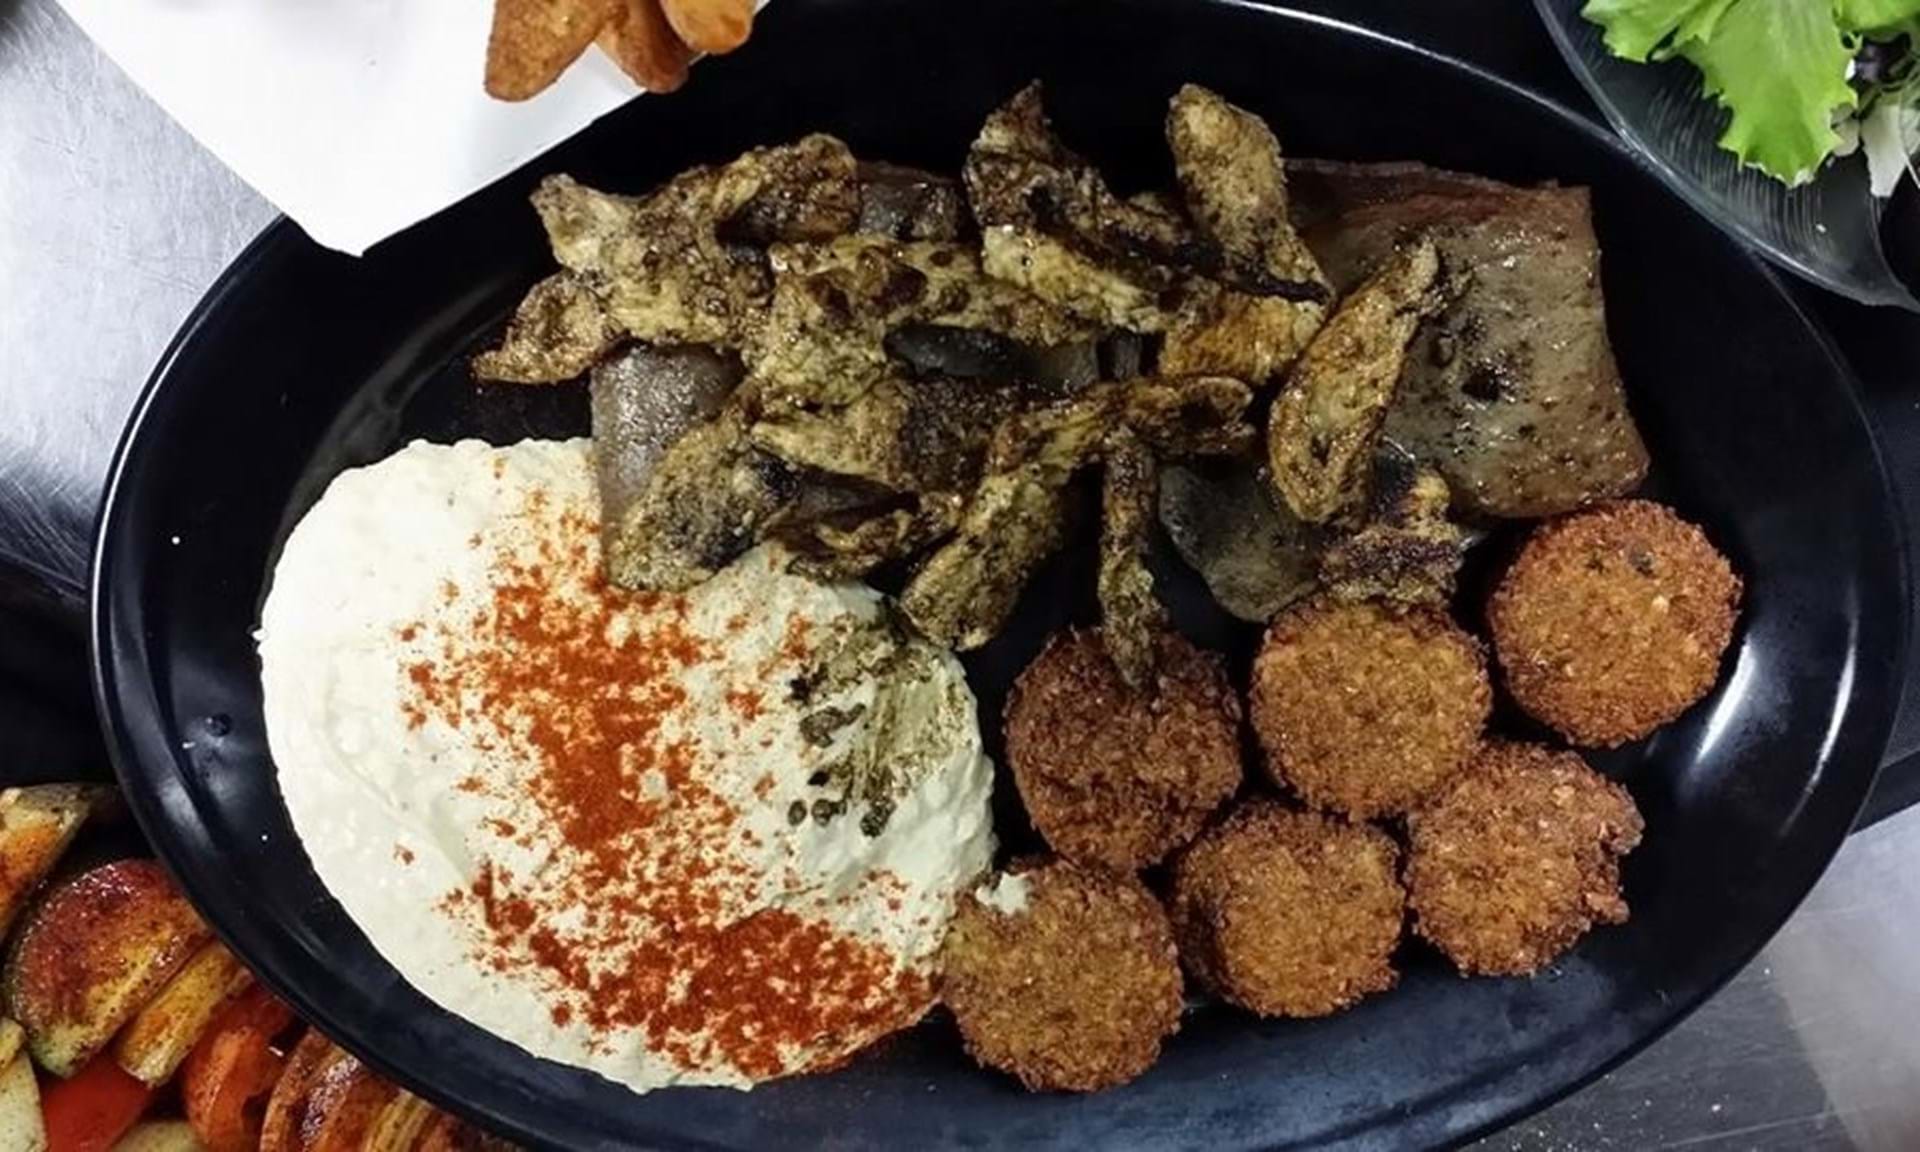 Kebab Plate with gyro and chicken shawarma meats and hummus and falafel balls. 